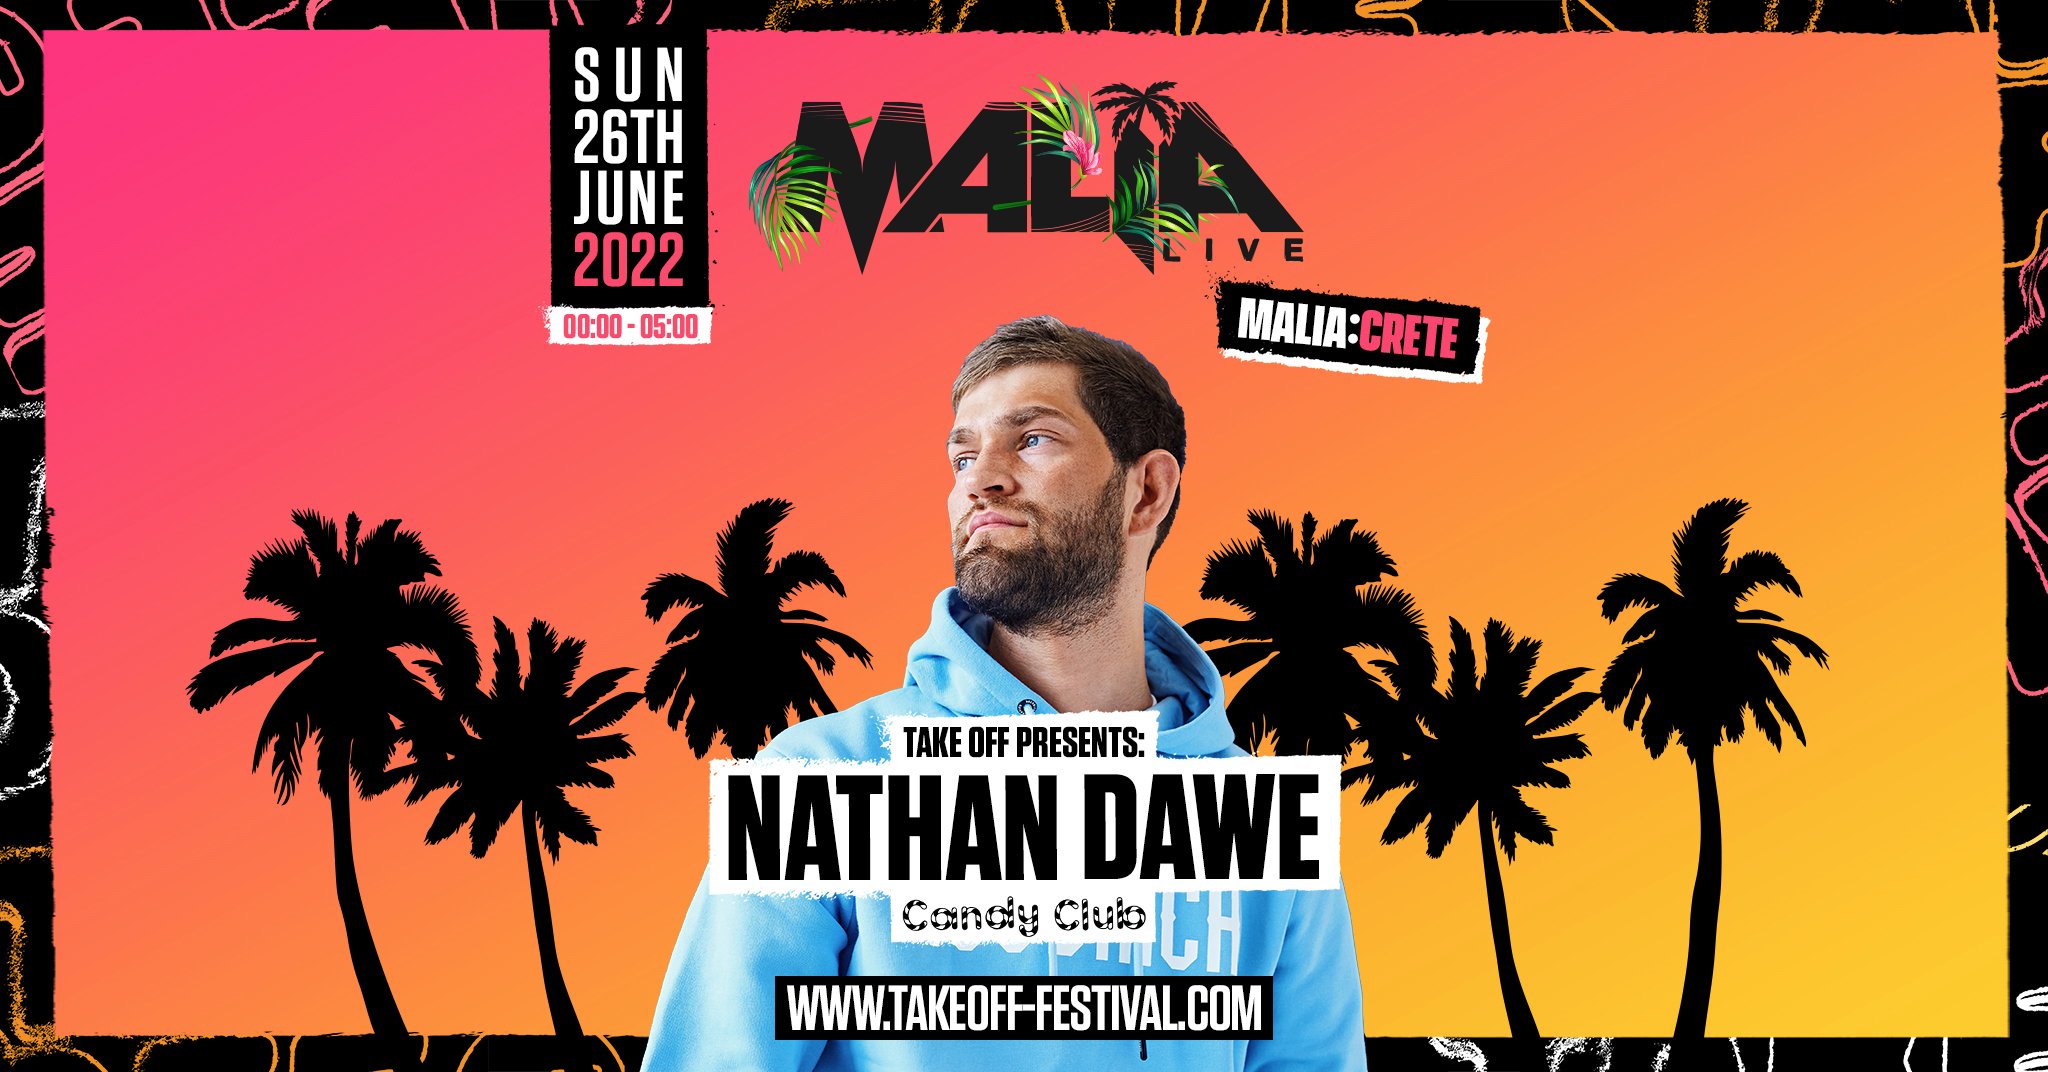 Take Off Presents: NATHAN DAWE at Malia Live Sundays